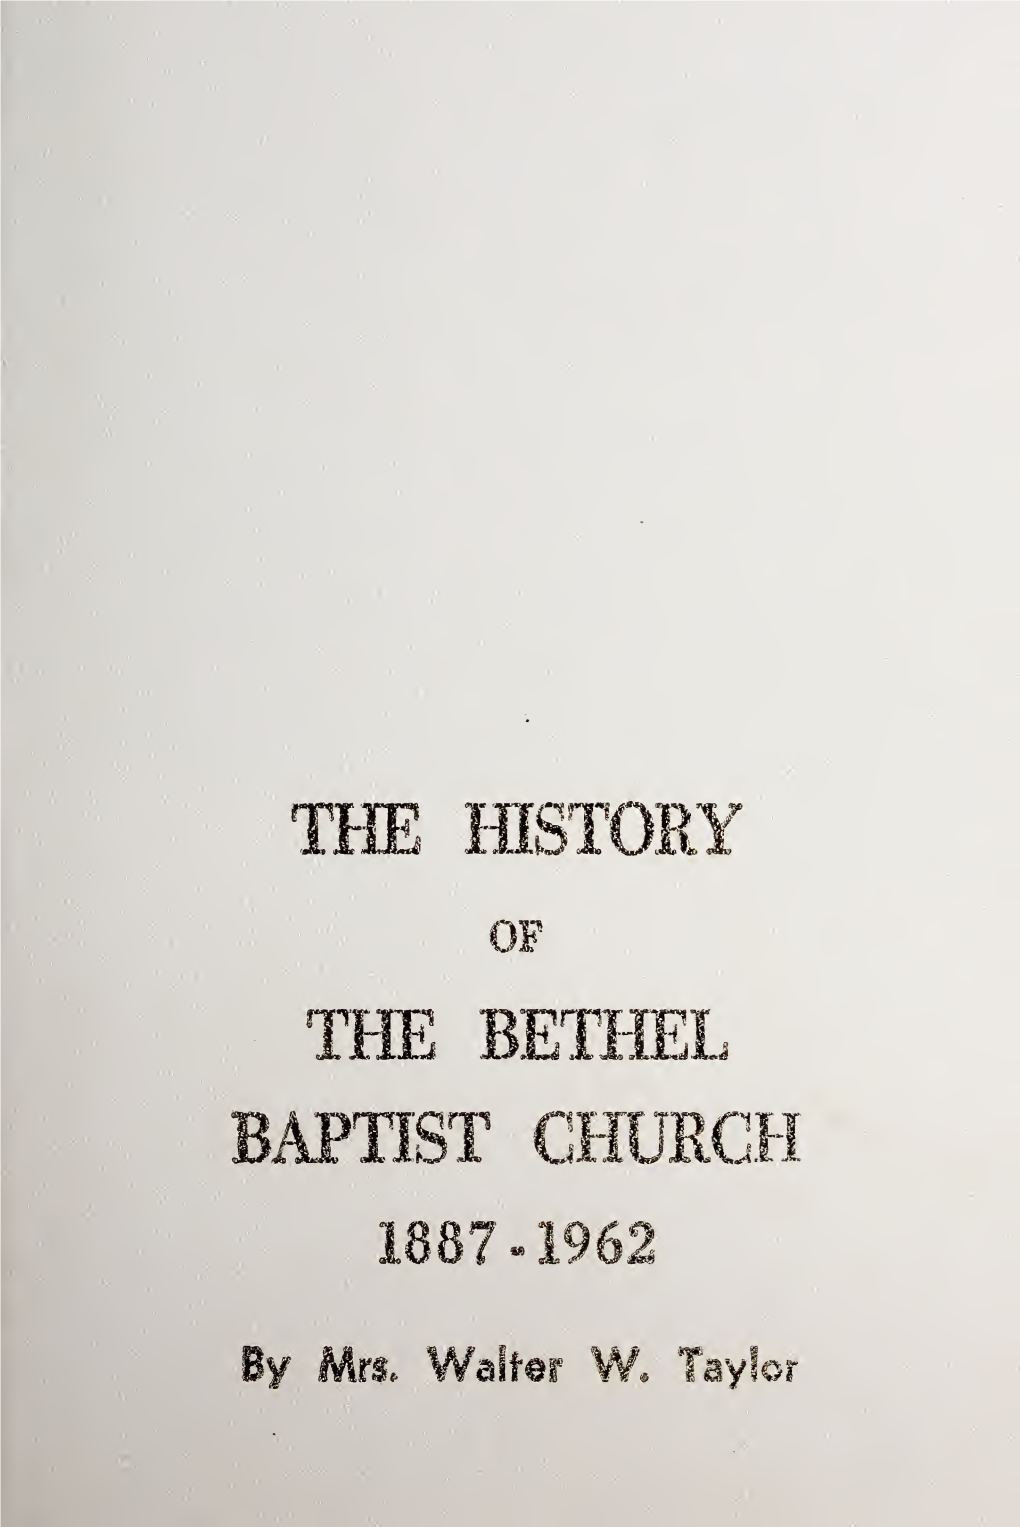 The History of the Bethel Baptist Church, 1887-1962